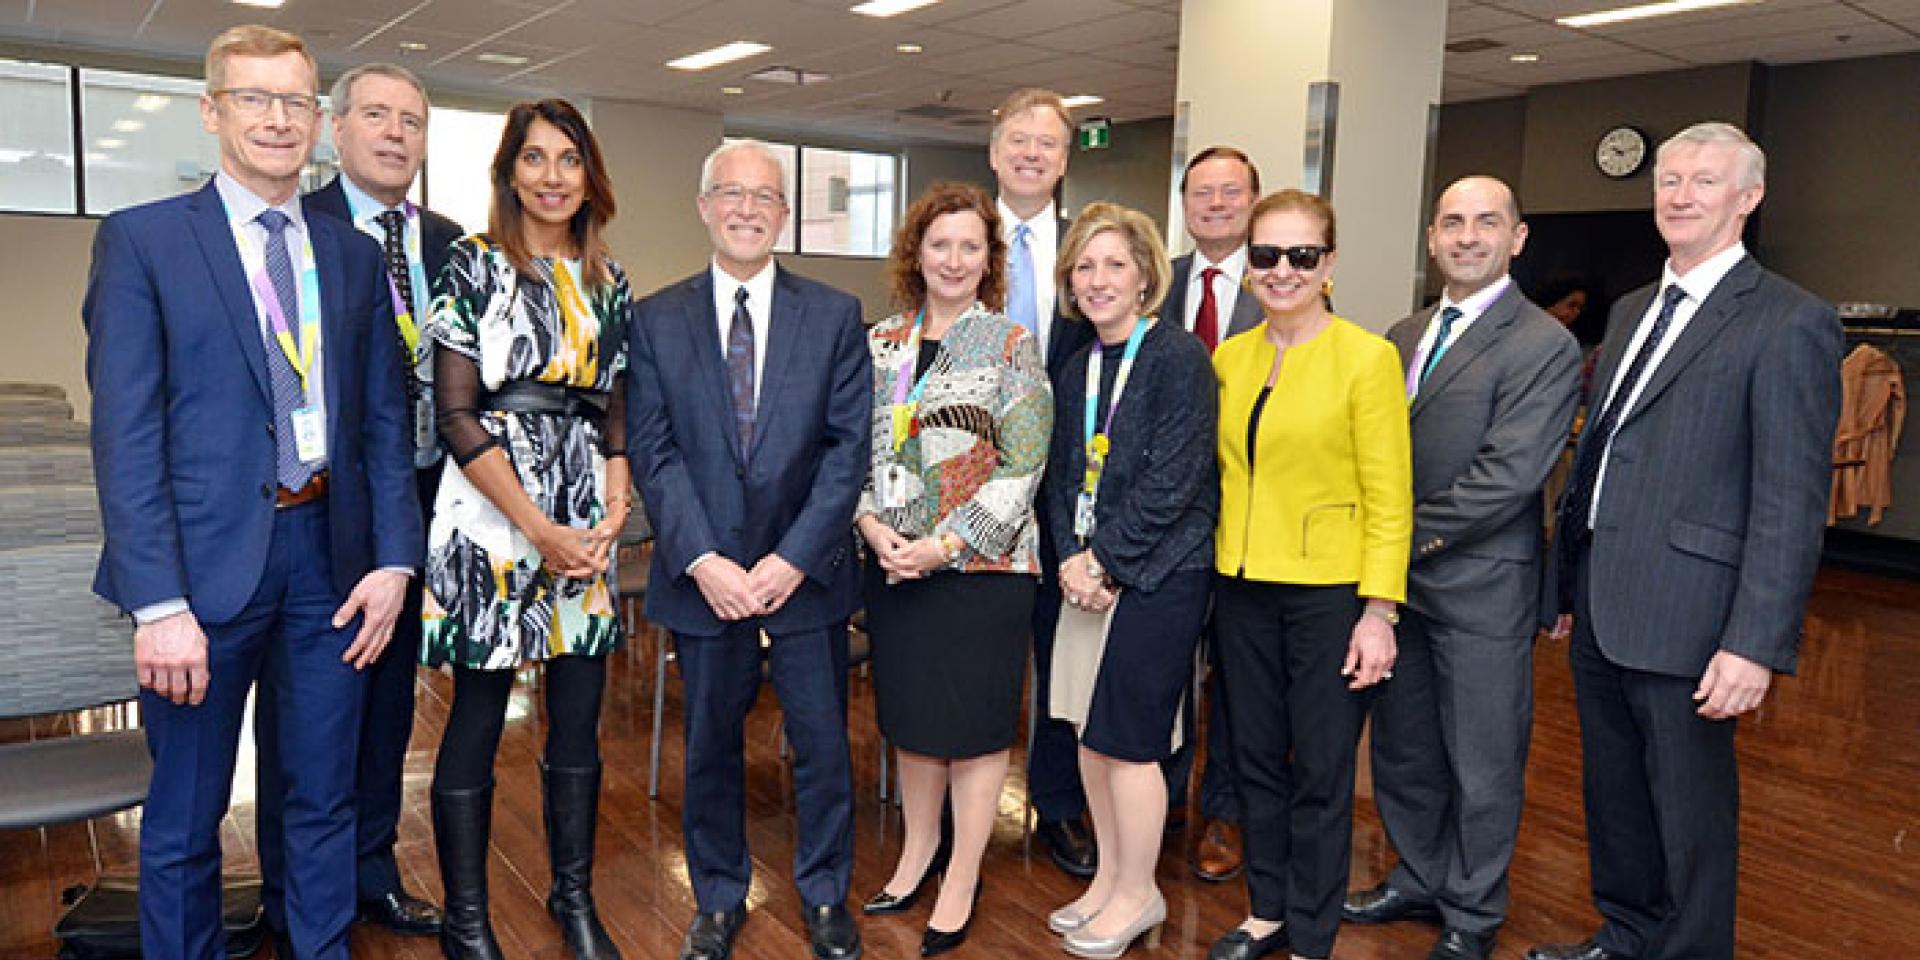 Michael Garron Hospital and Sunnybrook Health Sciences Centre Leadership Teams